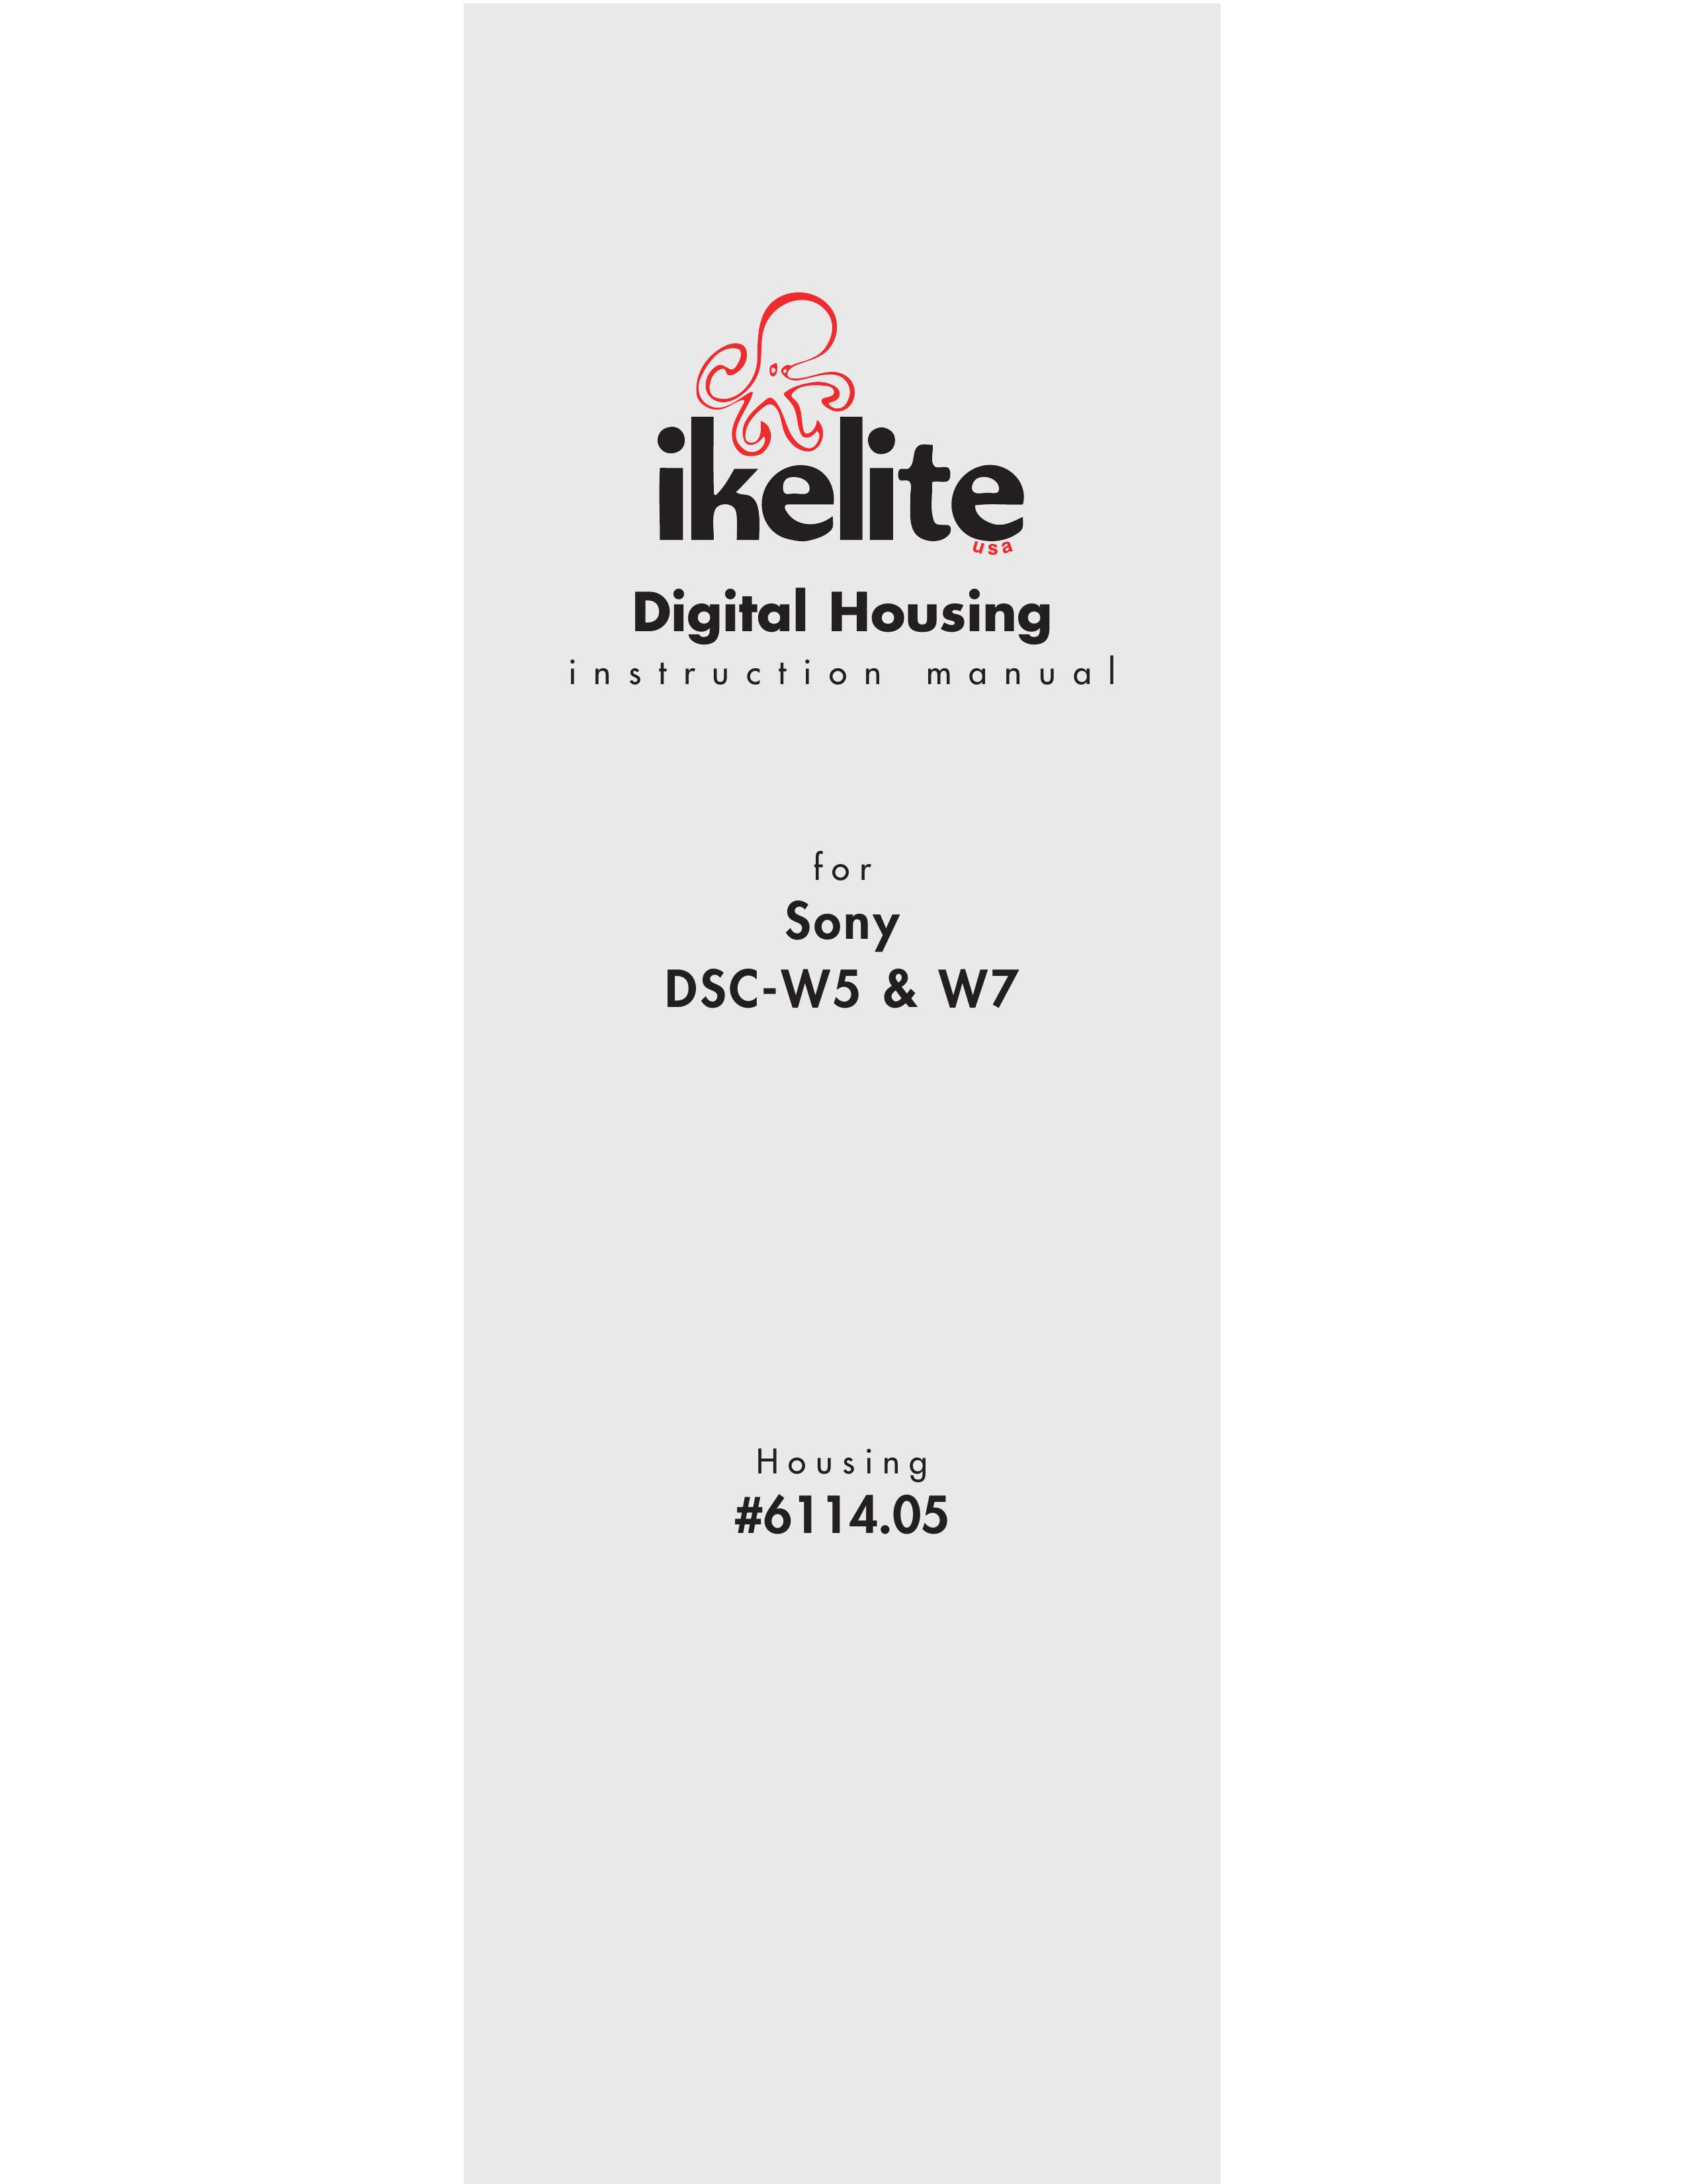 Ikelite DSC-W7 Digital Camera User Manual